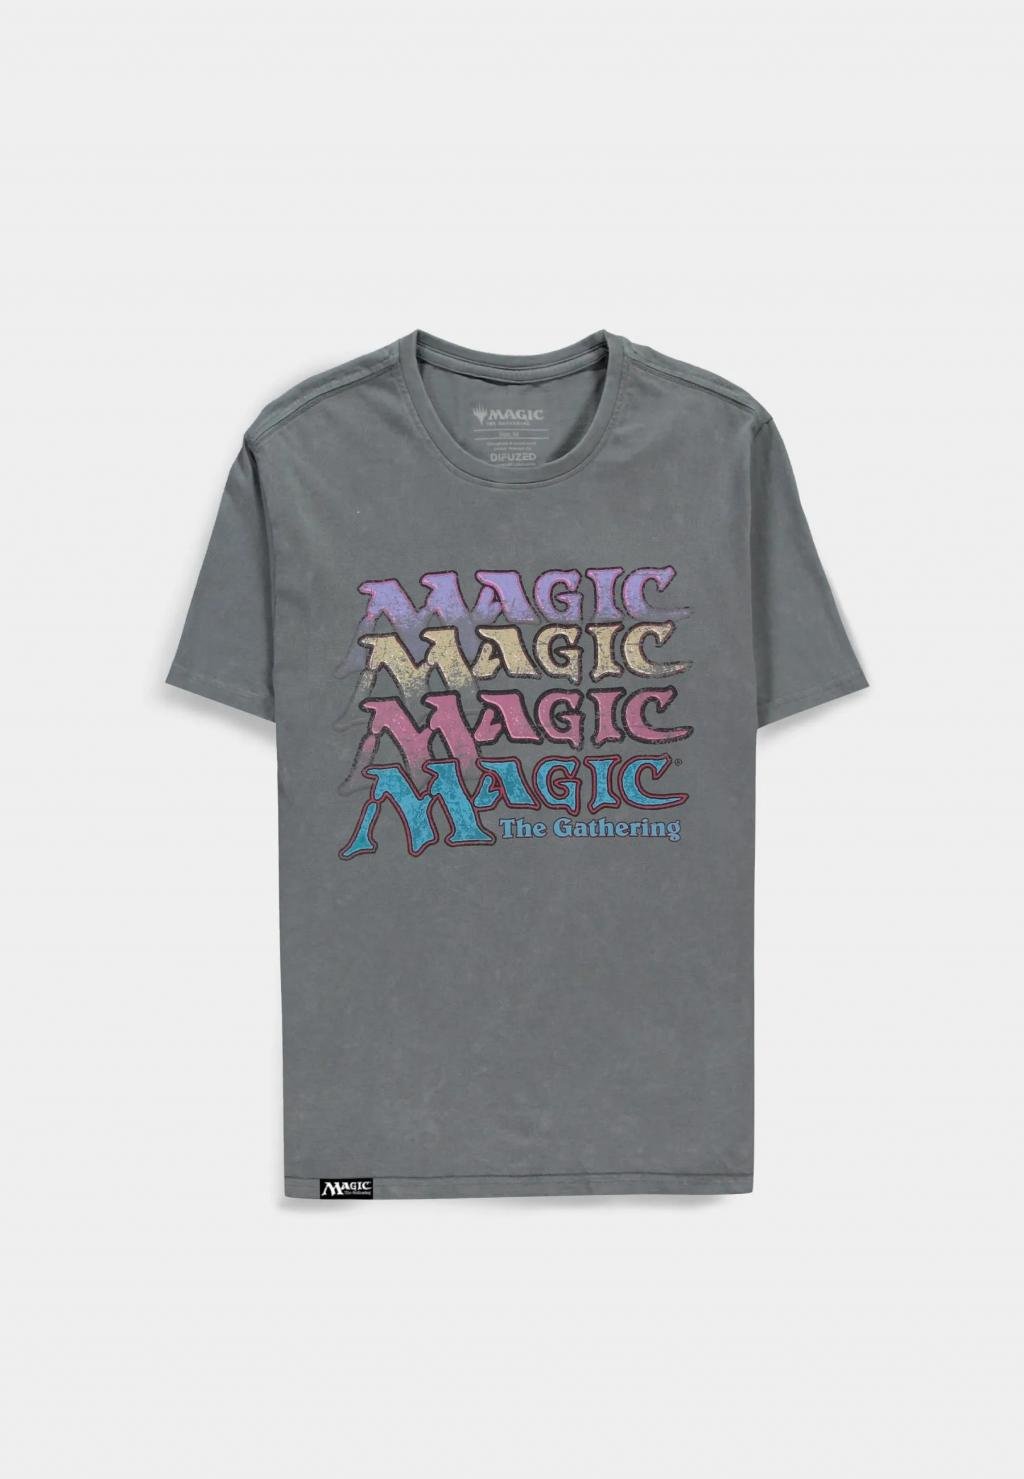 MAGIC THE GATHERING - Logo - Men's T-shirt (S)